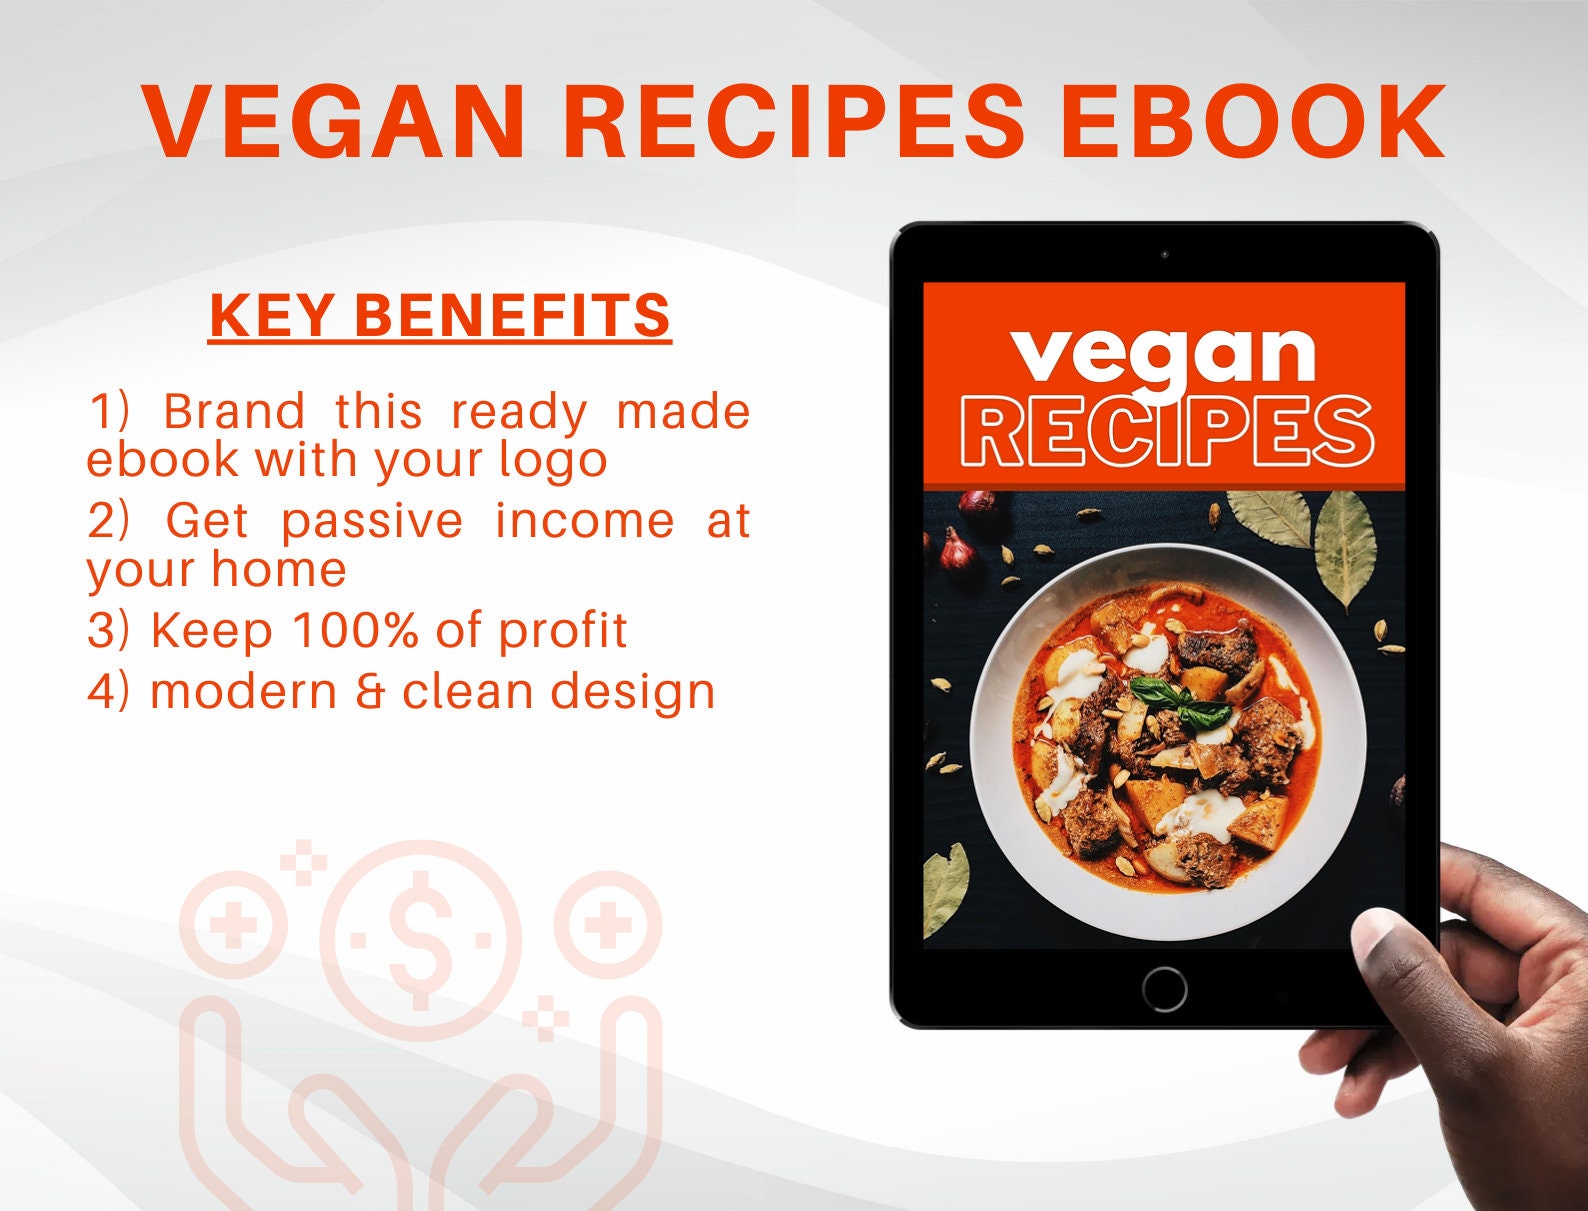 Vegan recipes ebook healthy food ebook cookbook vegan | Etsy